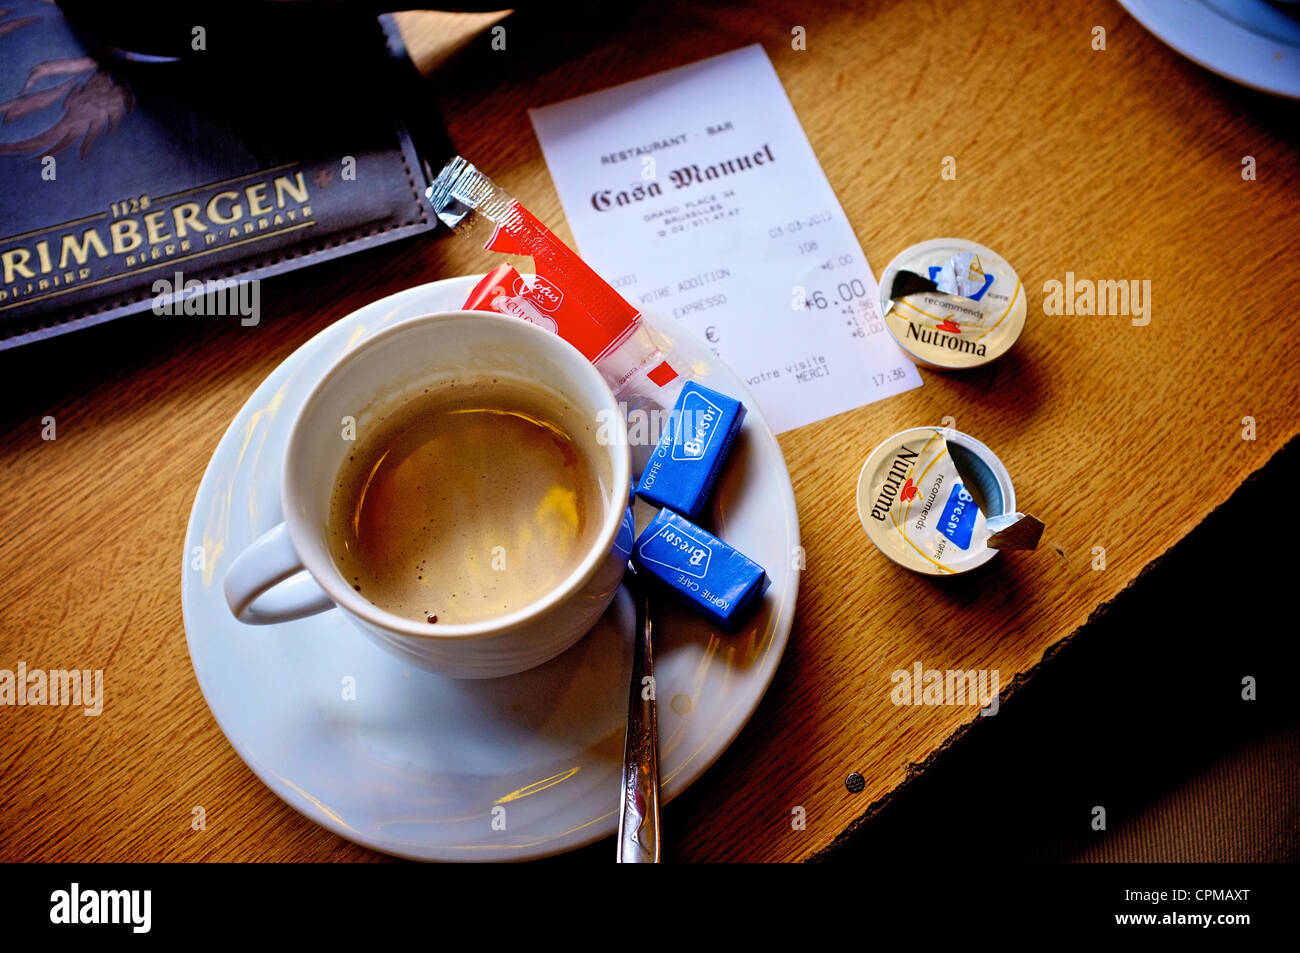 A Coffee break in a cafe. Stock Photo